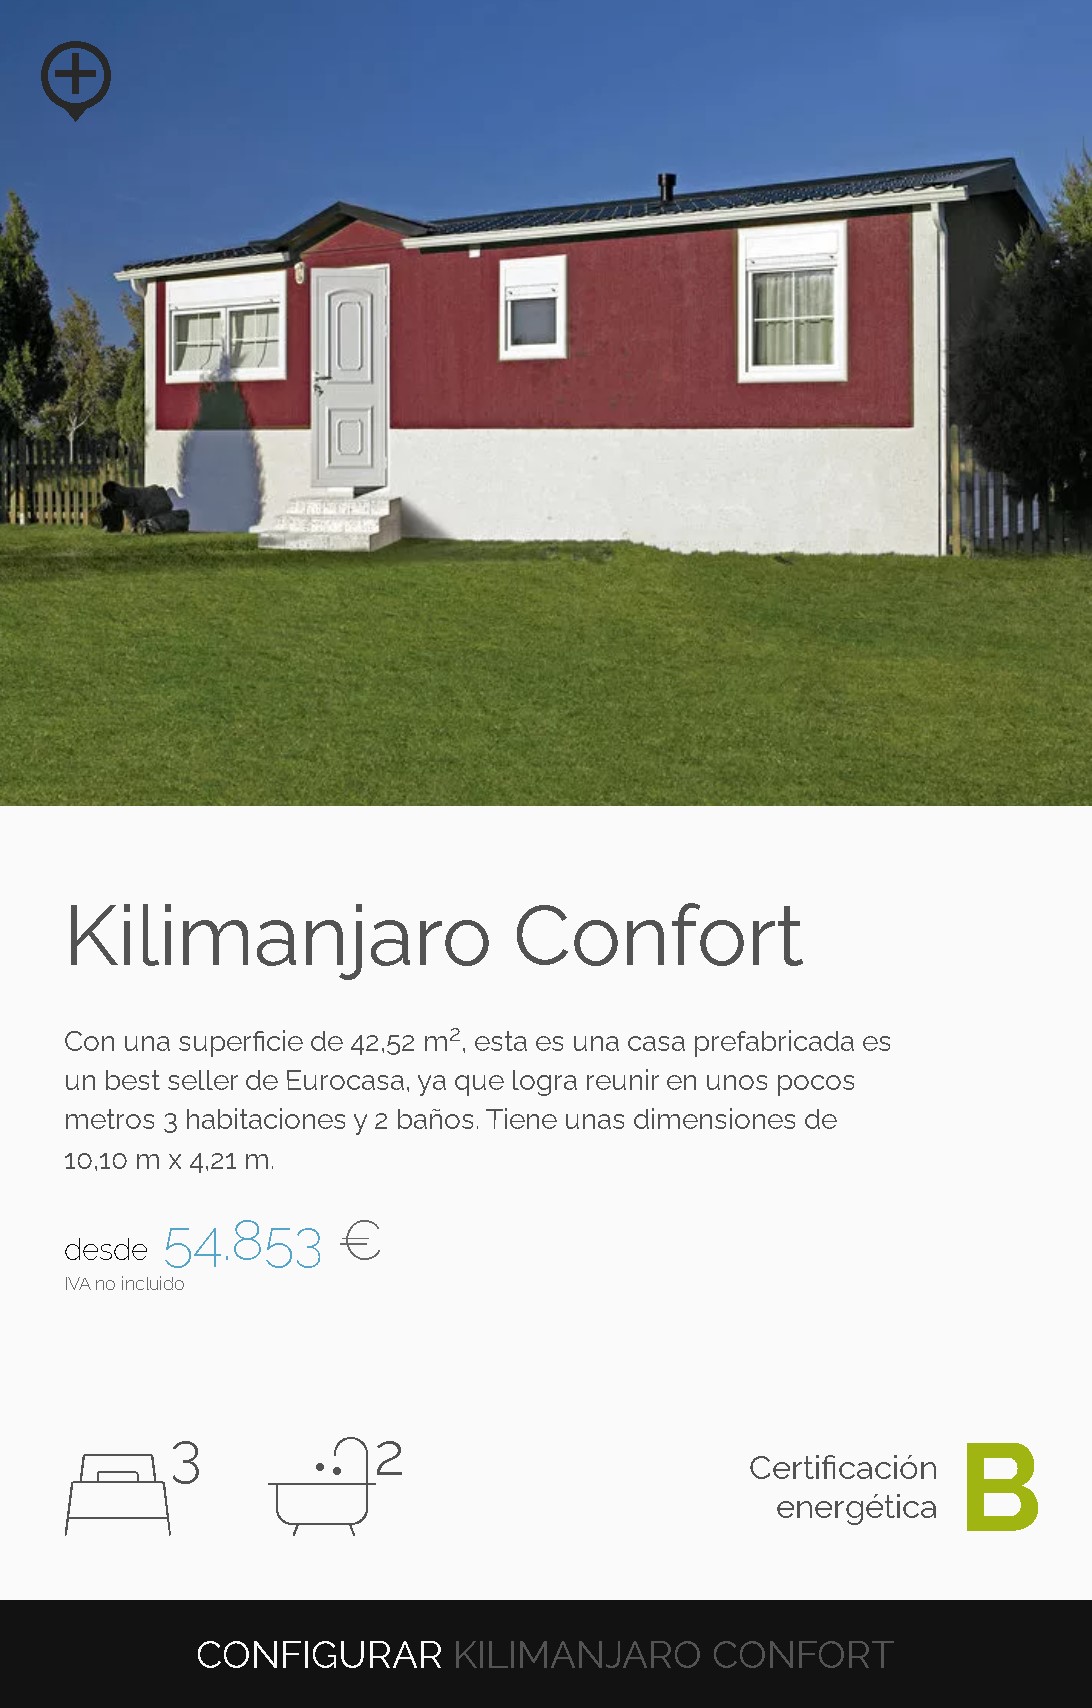 Modelo de casa prefabricada Kilimanajaro confort